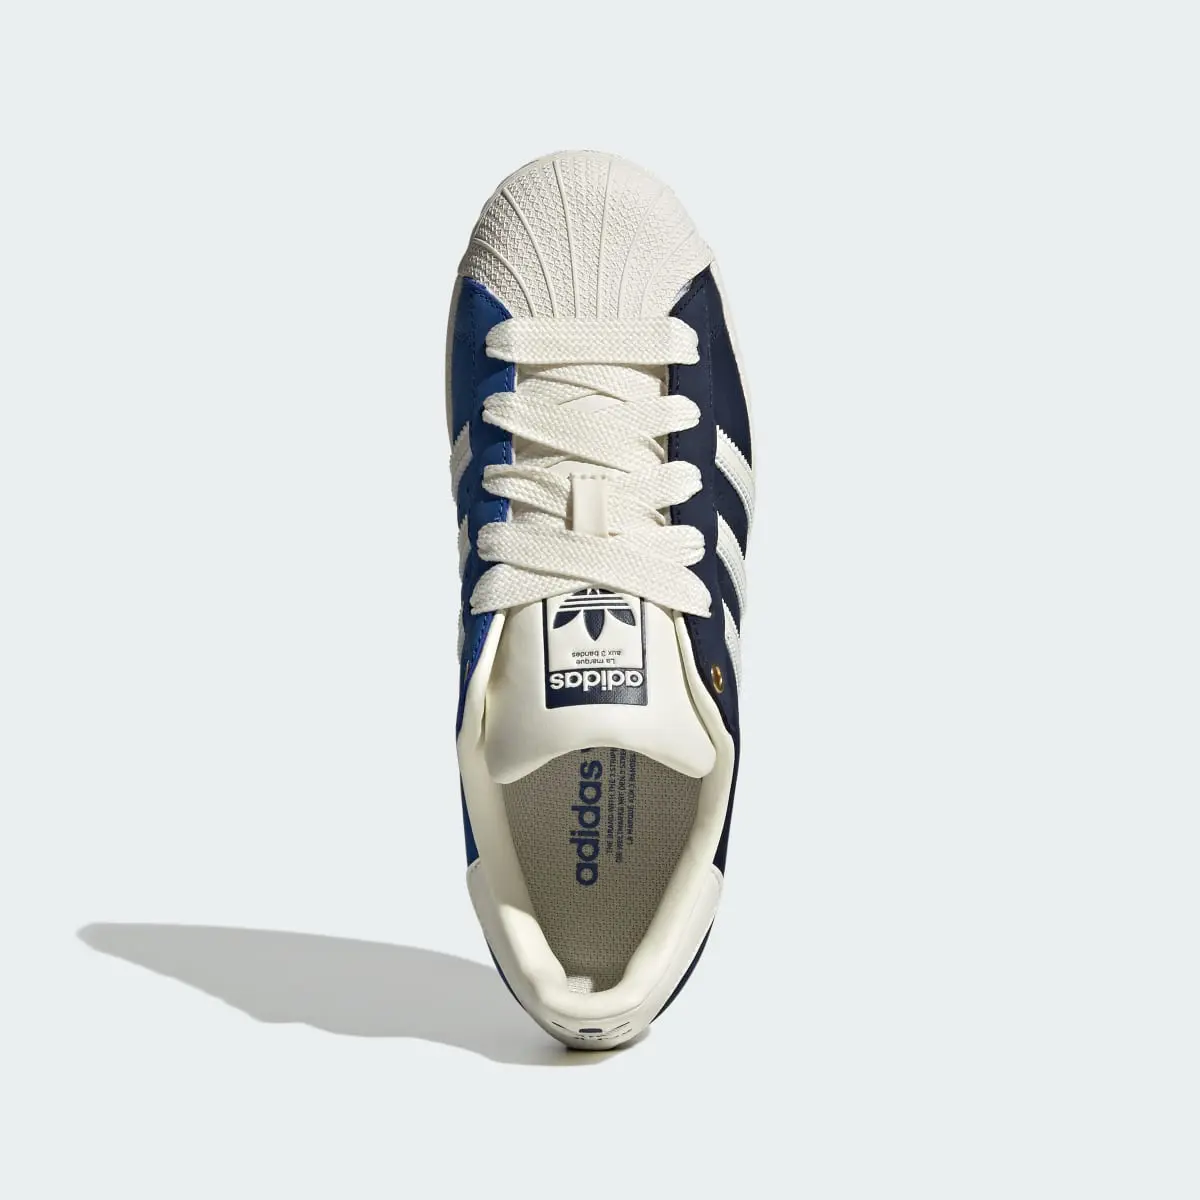 Adidas Superstar Shoes. 3